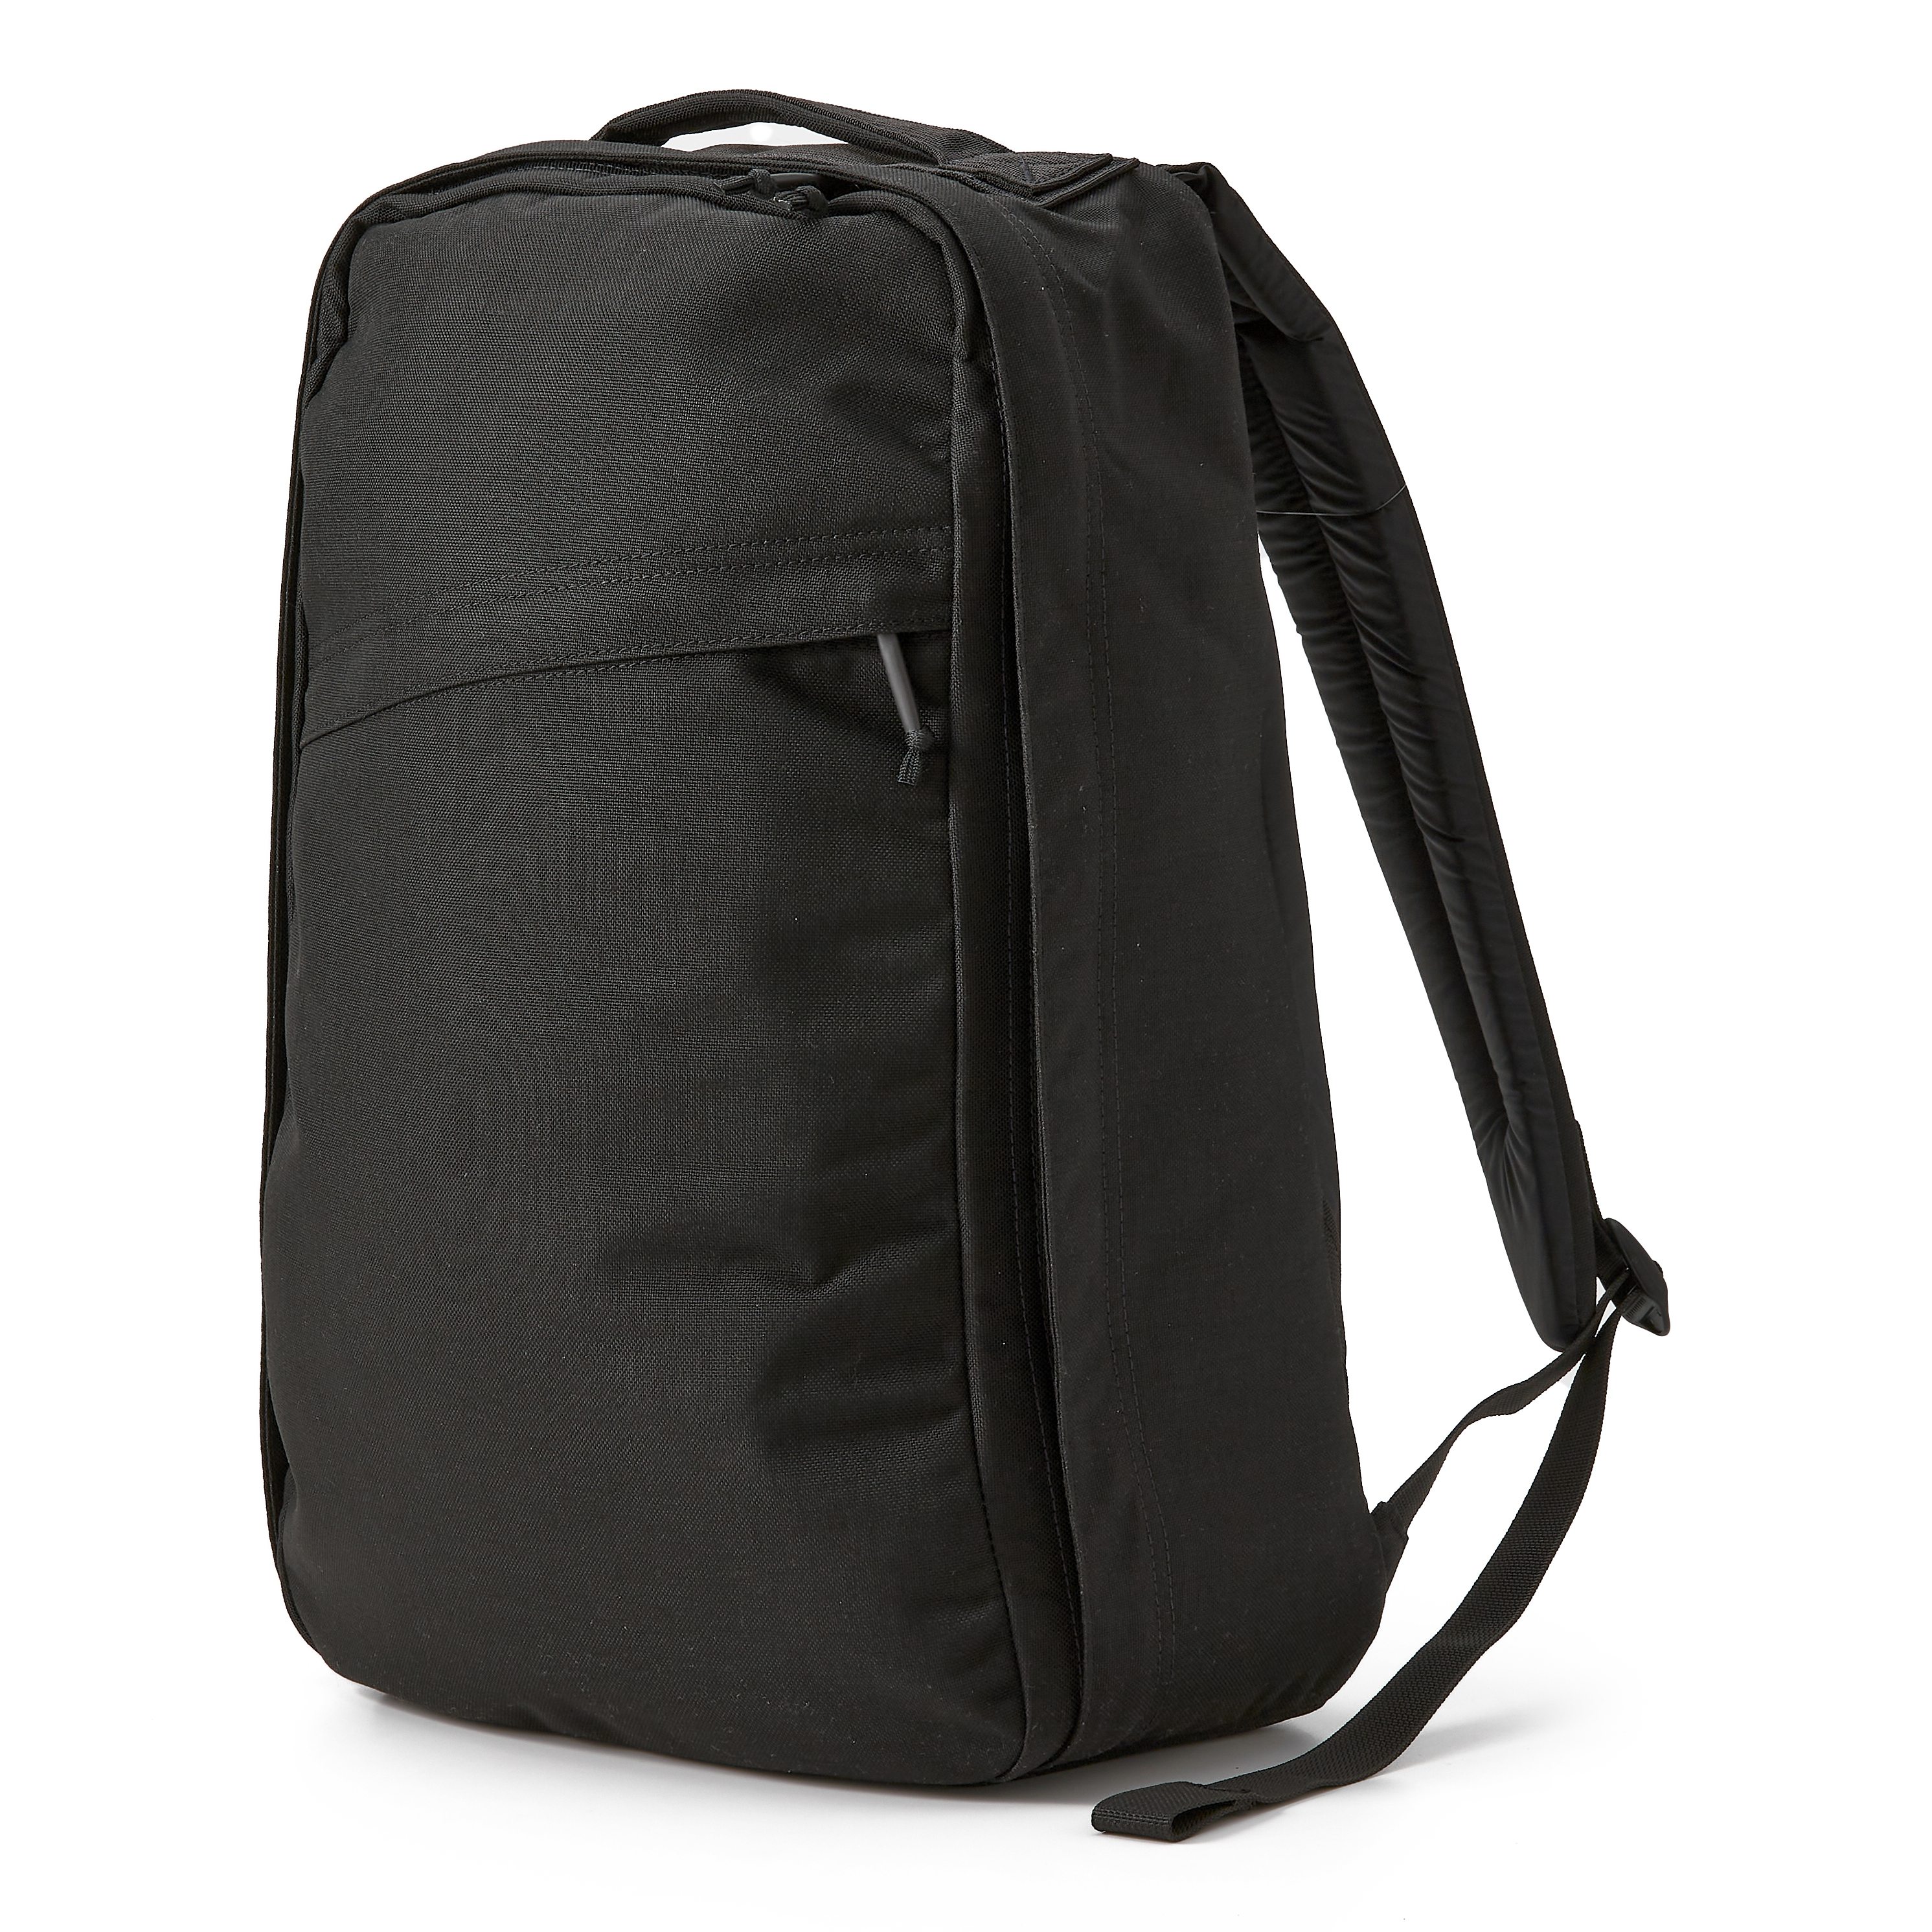 GORUCK Huckberry X GORUCK GR1 Slick Backpack - 26L - Black